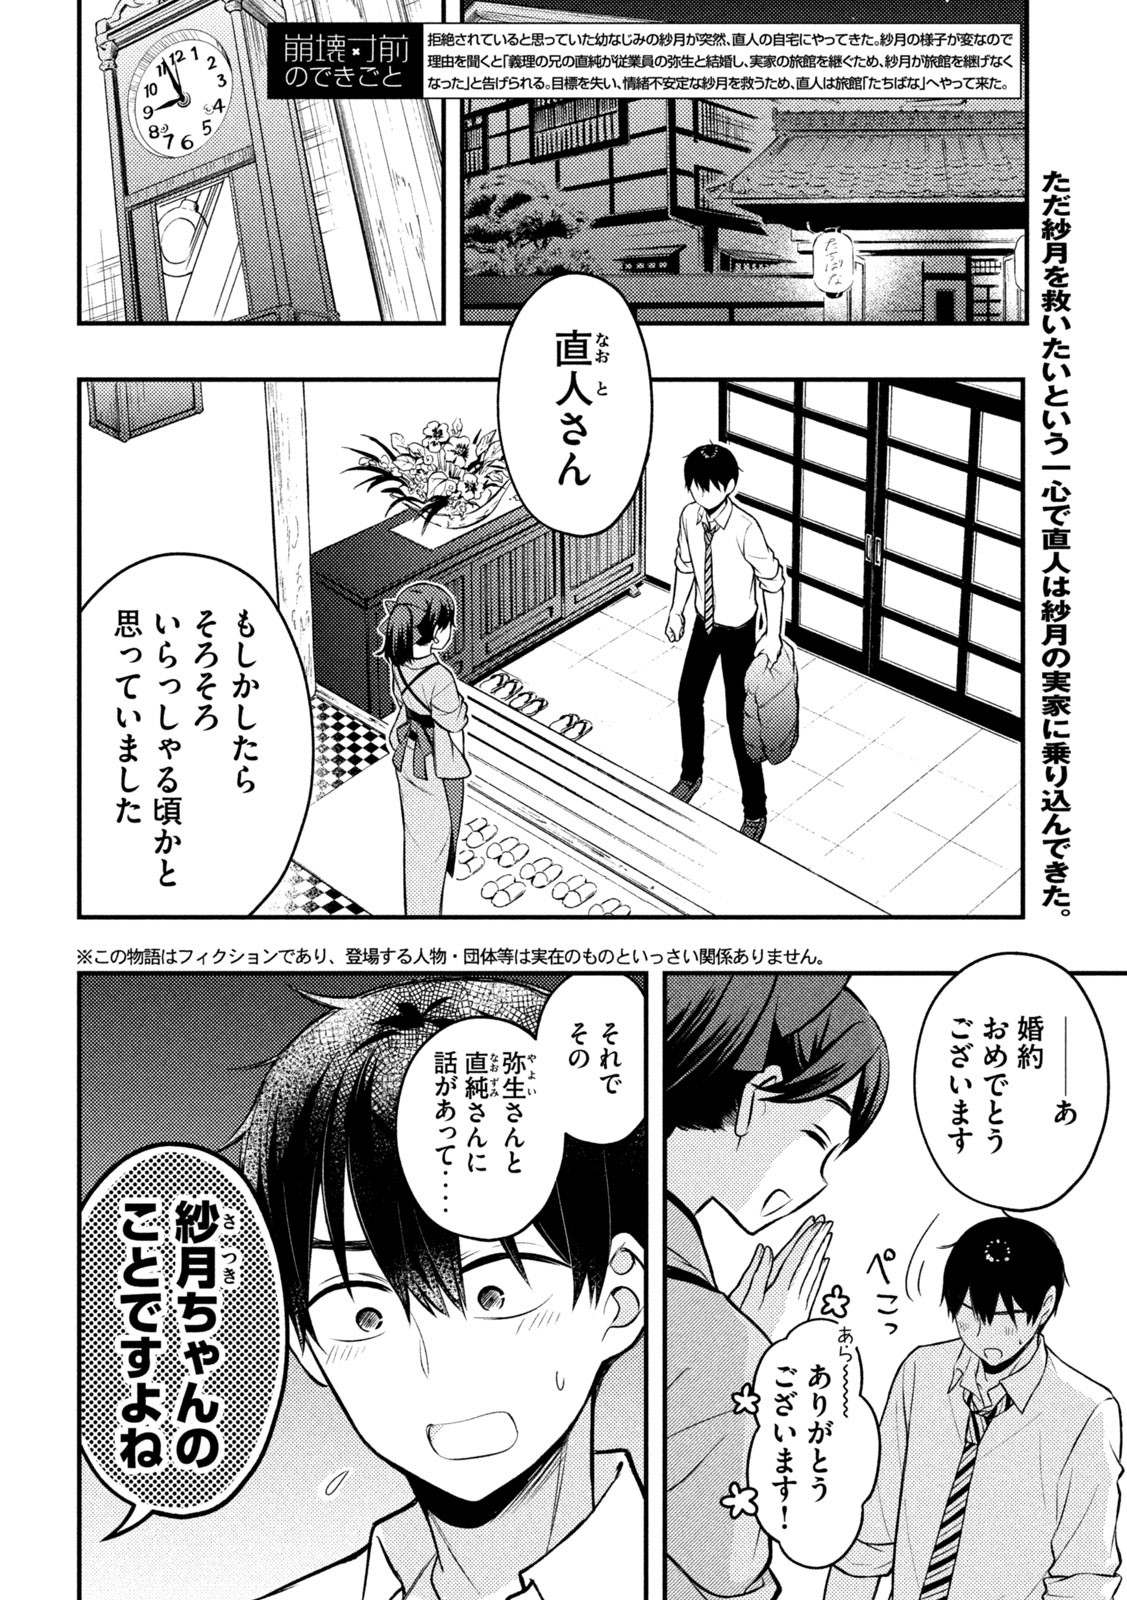 Watari-kun no xx ga Houkai Sunzen - Chapter 78 - Page 2